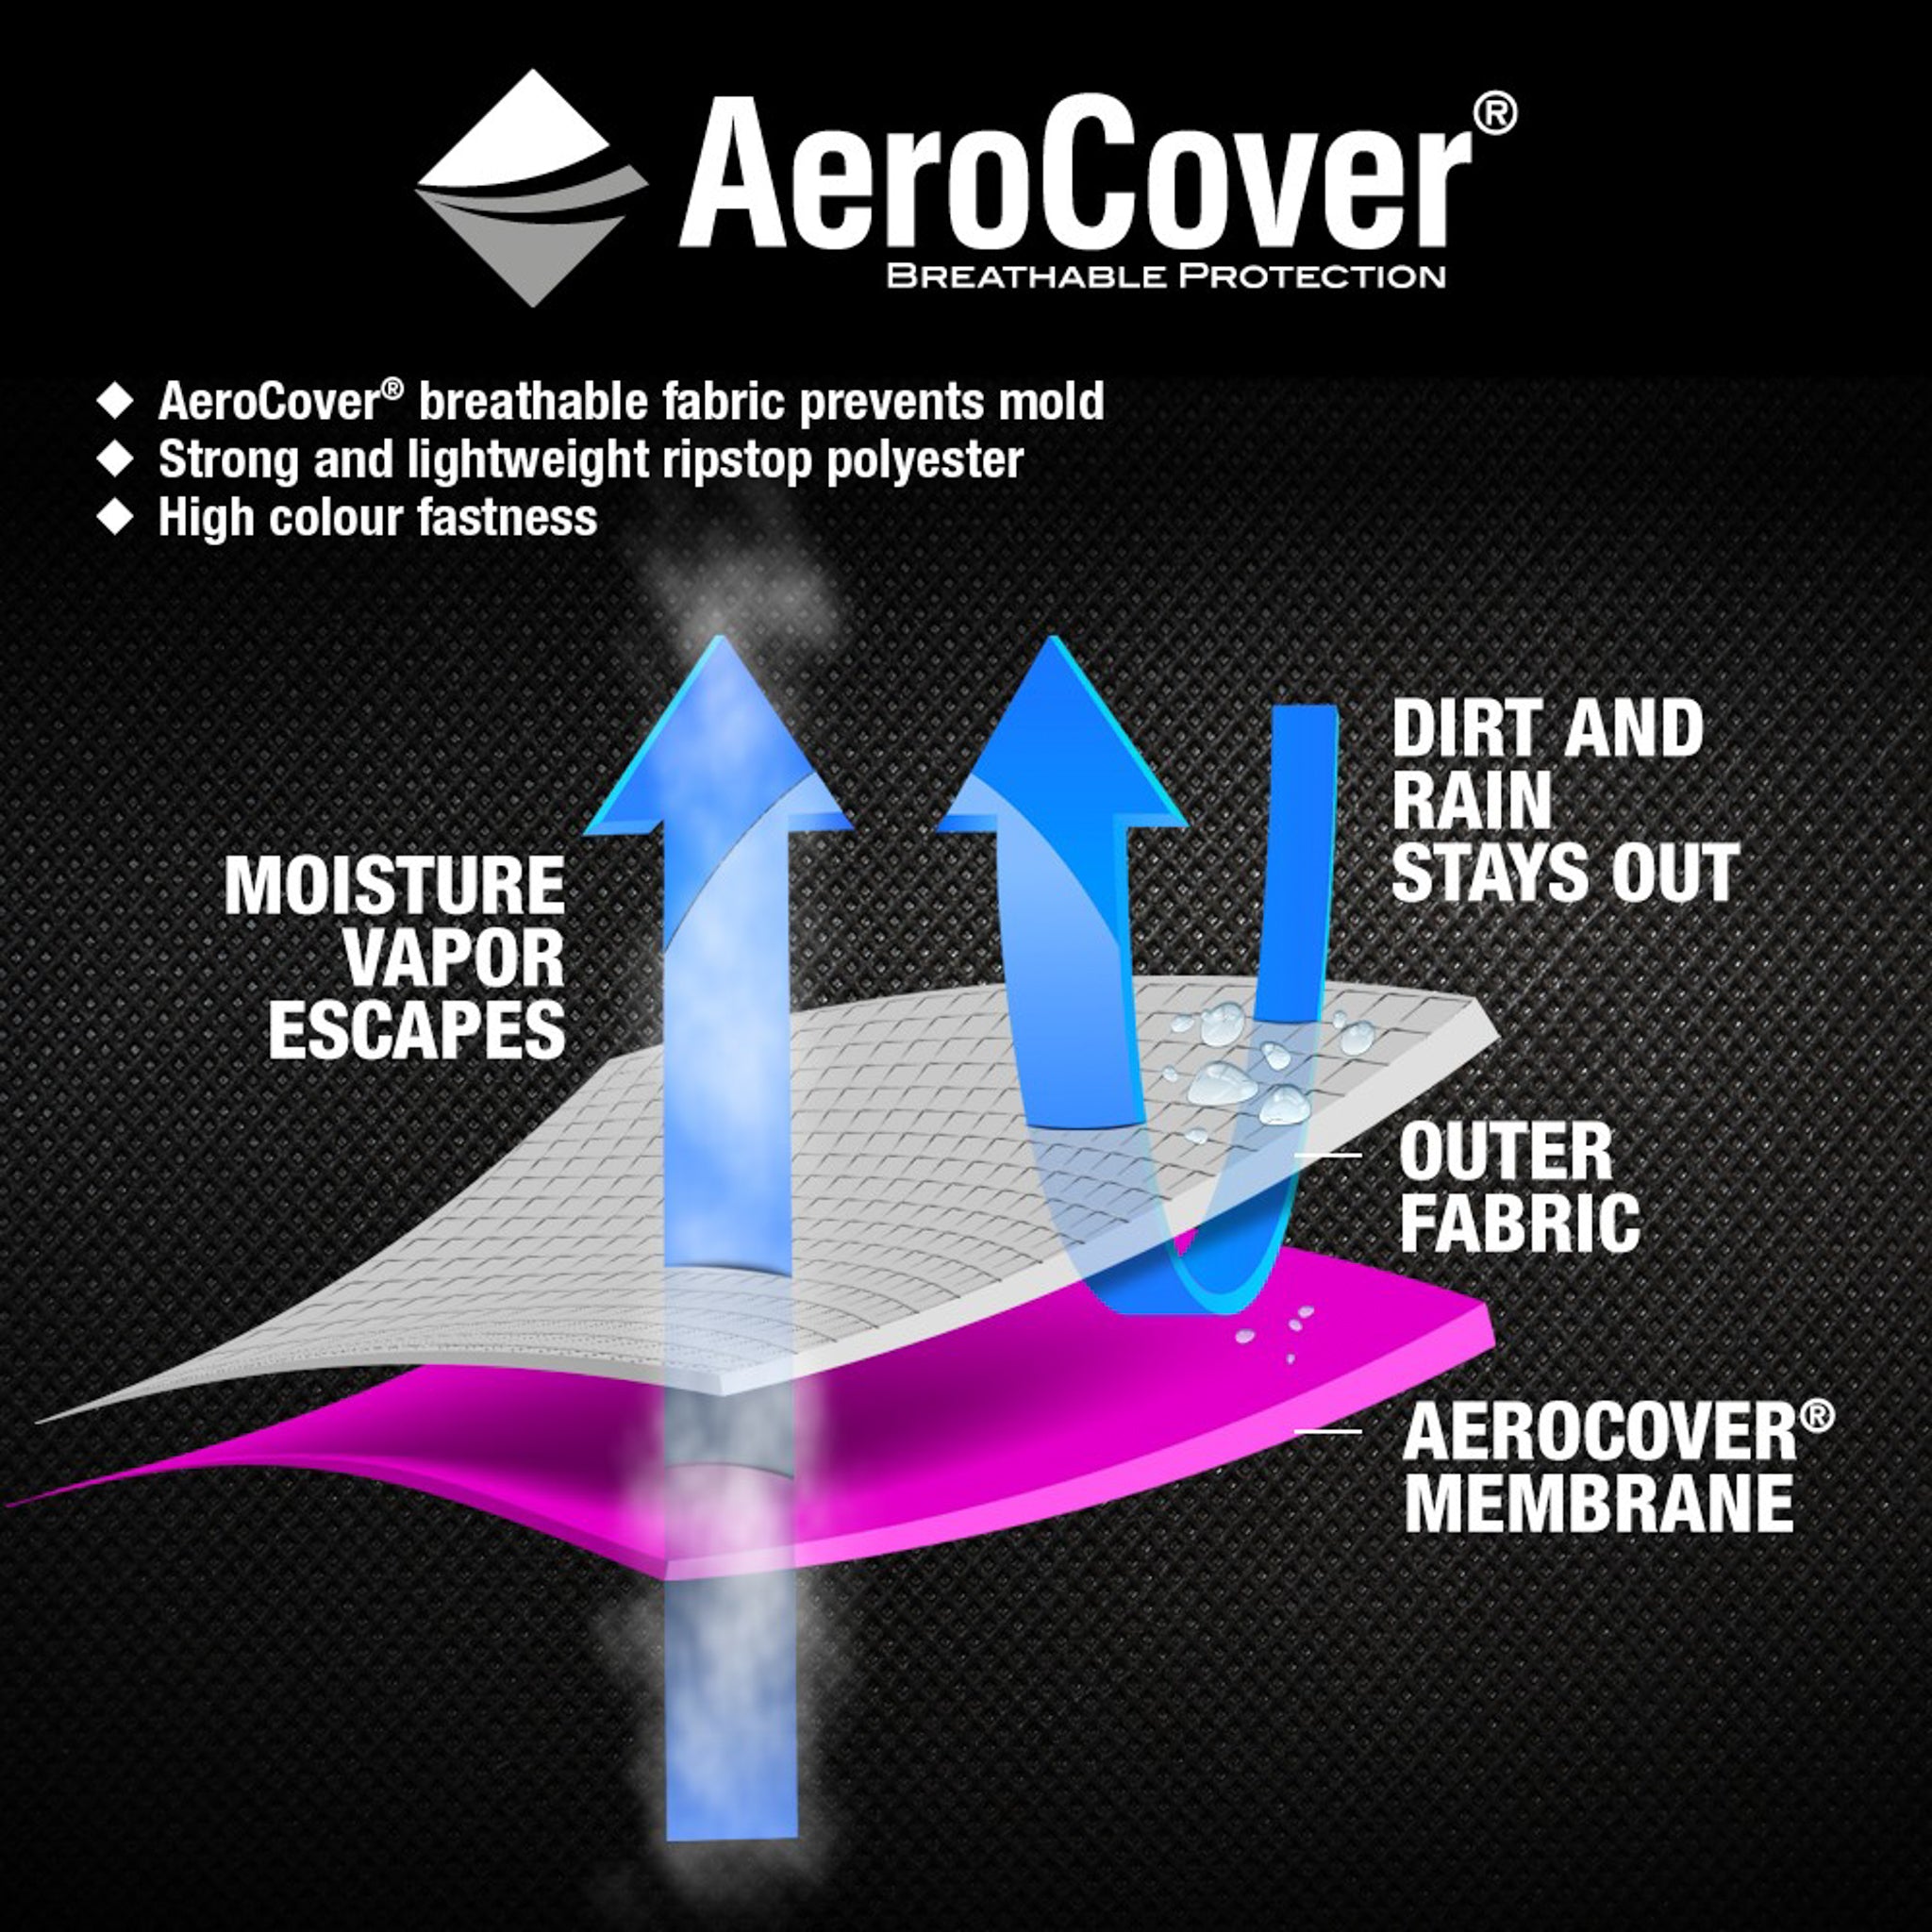 AeroCover - Gas Barbecue Cover 148 x 61 x 110cm high